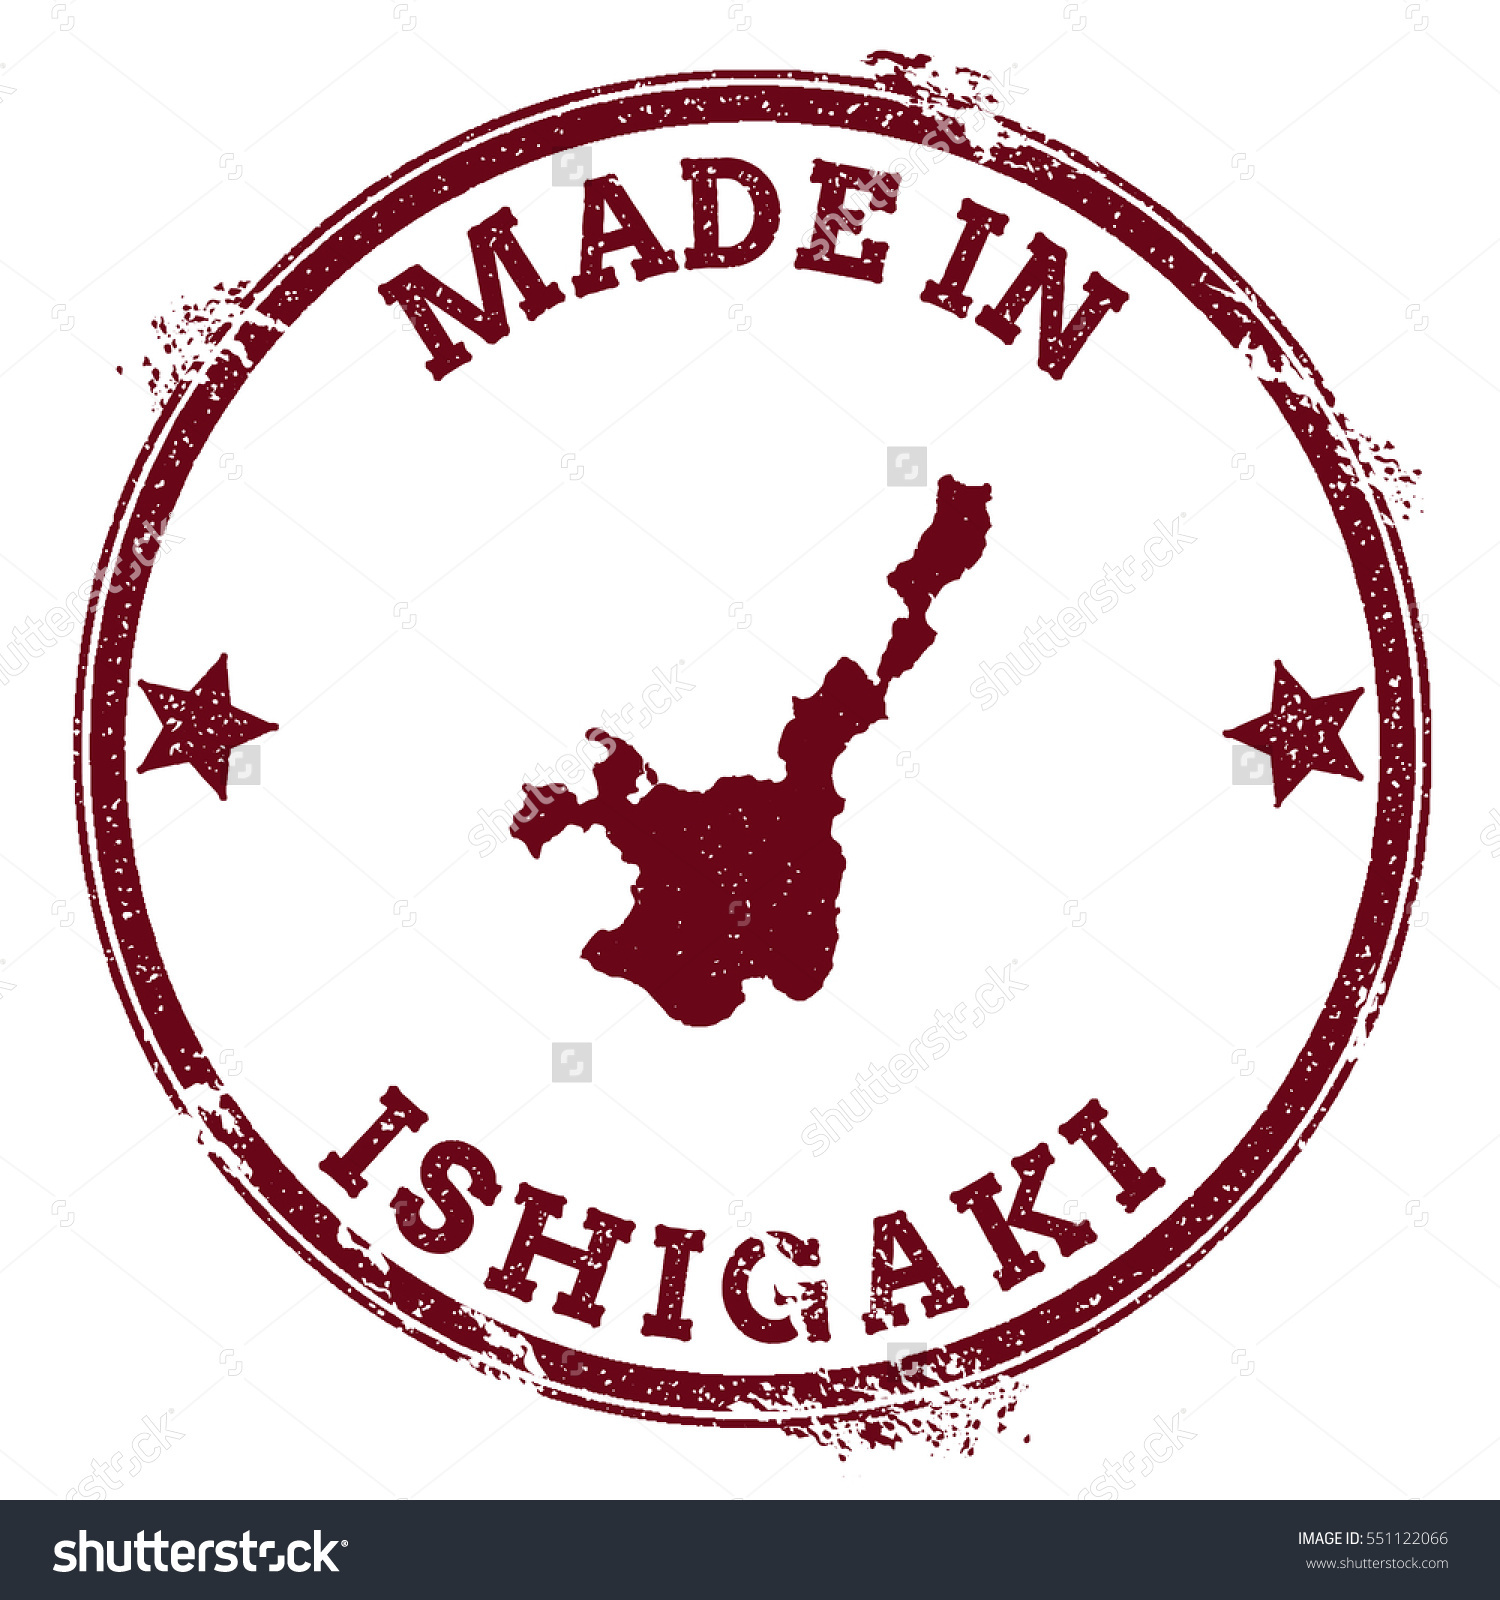 Ishigaki Vector Seal Vintage Island Map Stock Vector 551122066.